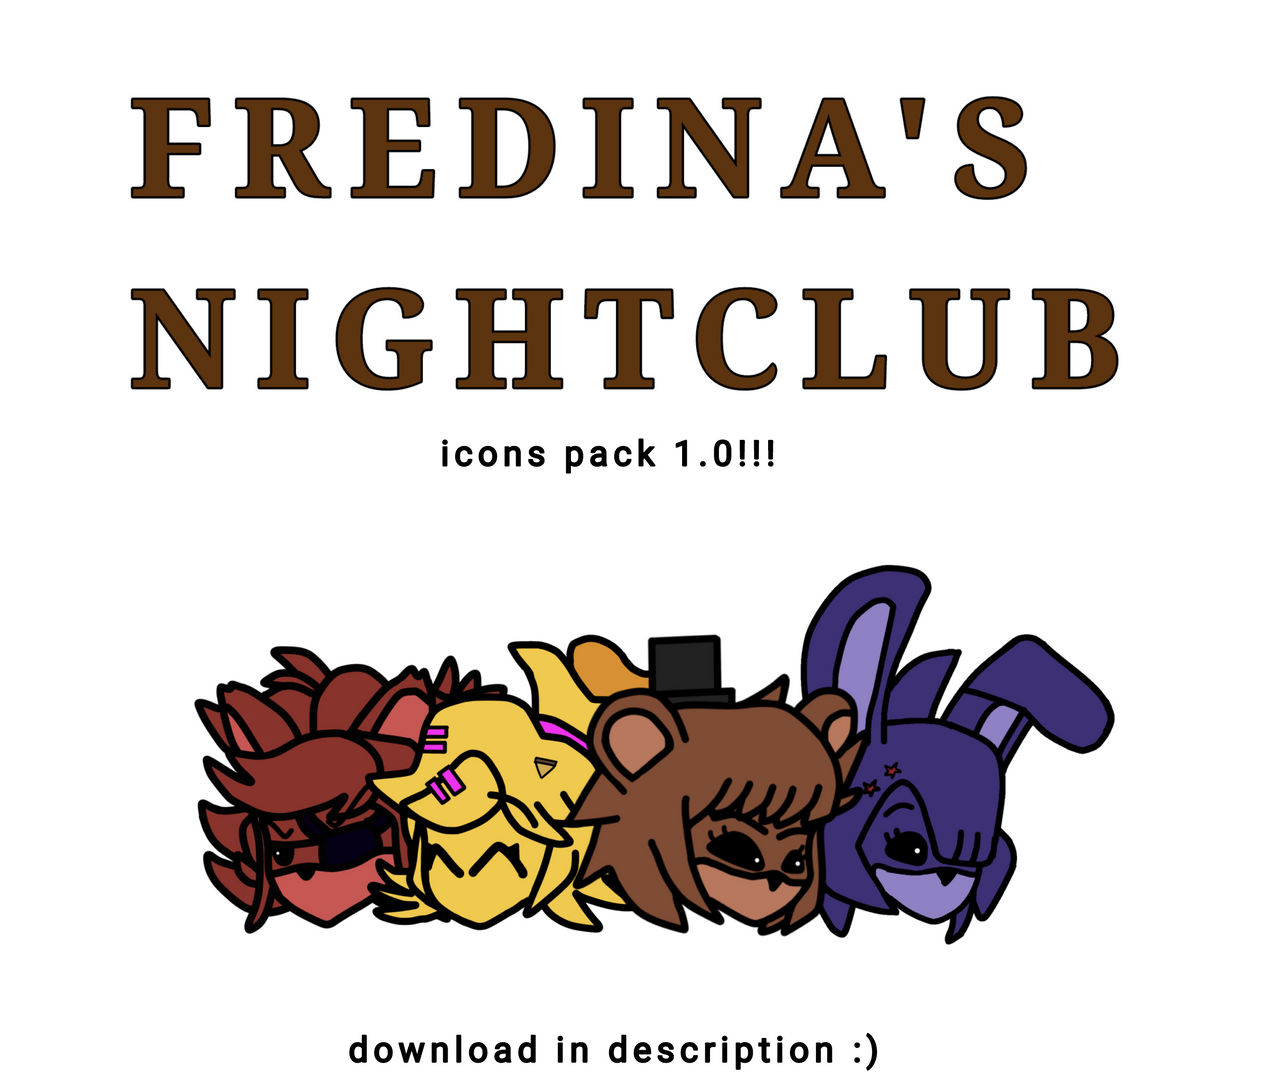 Fredinas Nightclub icons pack 2.0 download!!! by elpijudo on DeviantArt